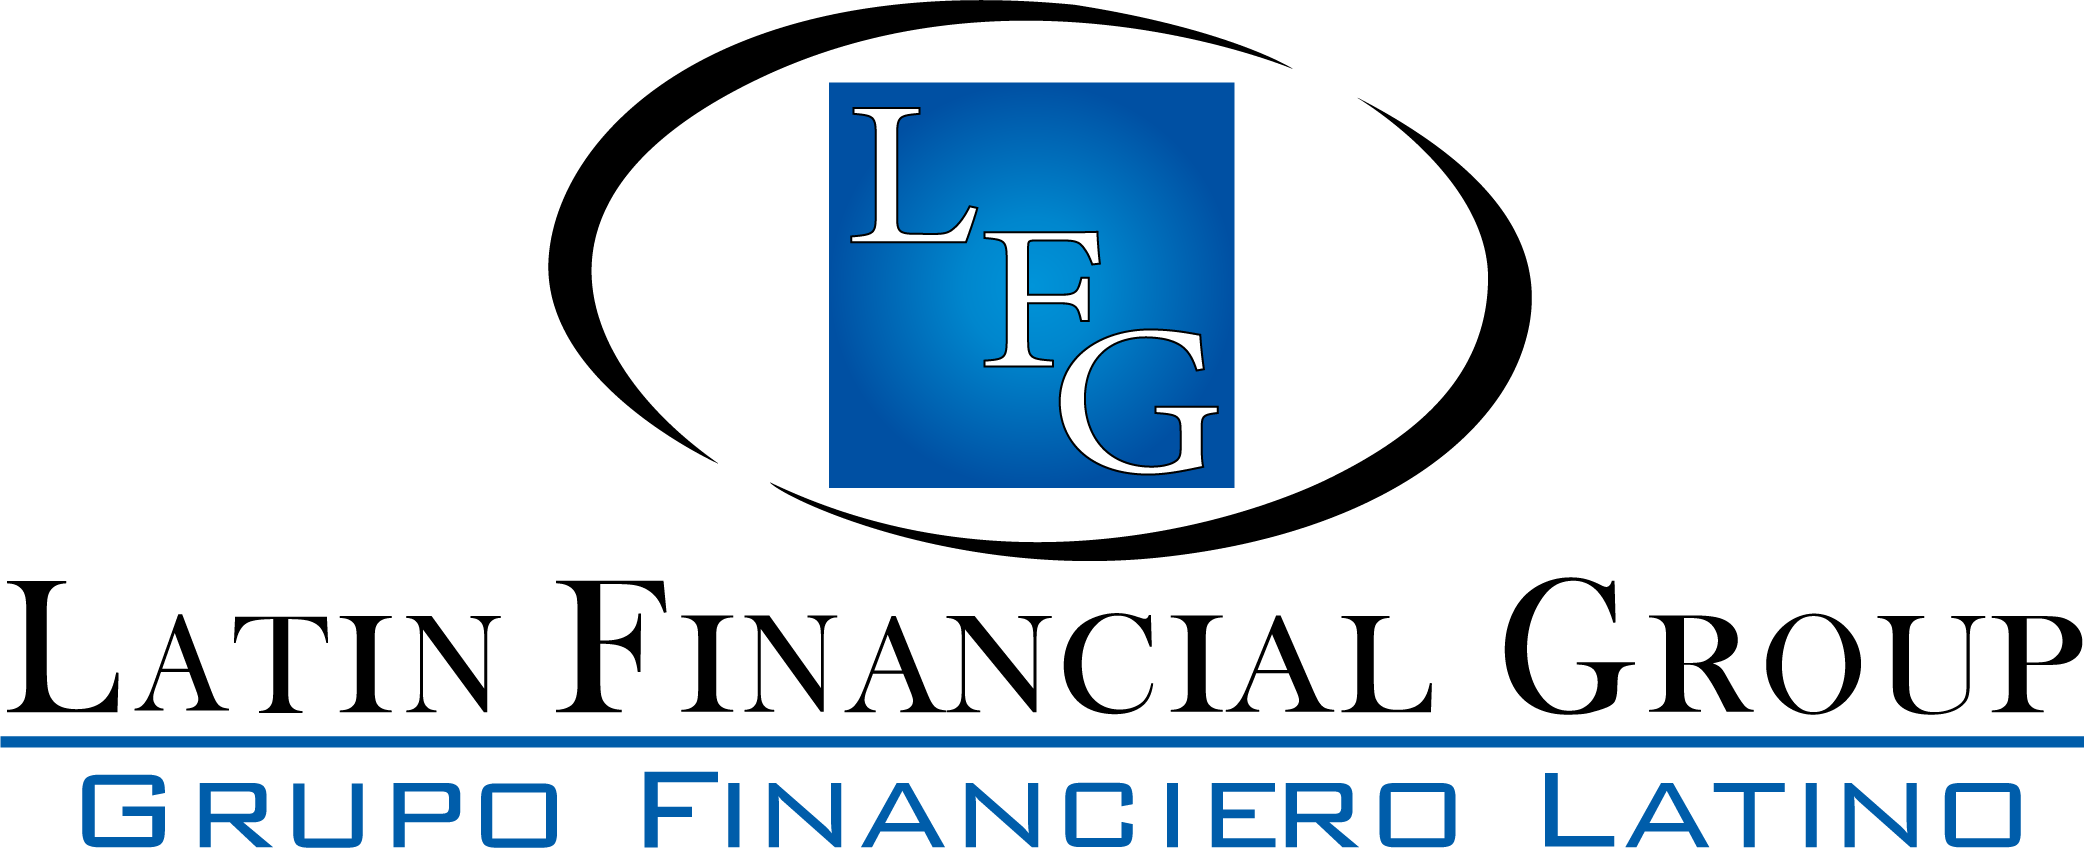 Latin Financial Group